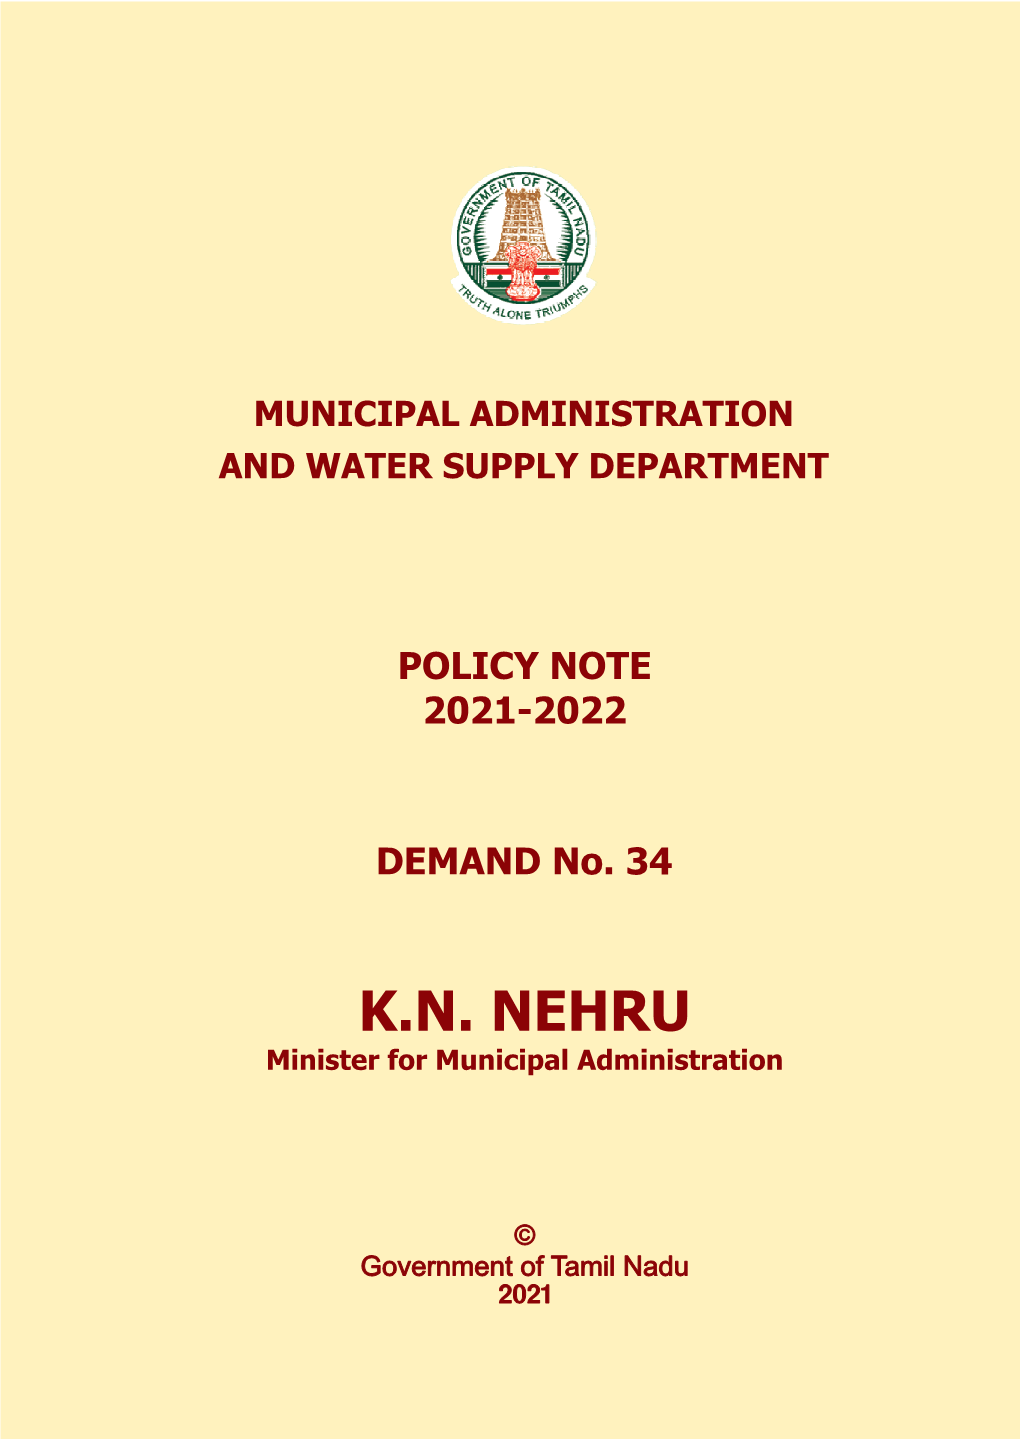 K.N. NEHRU Minister for Municipal Administration